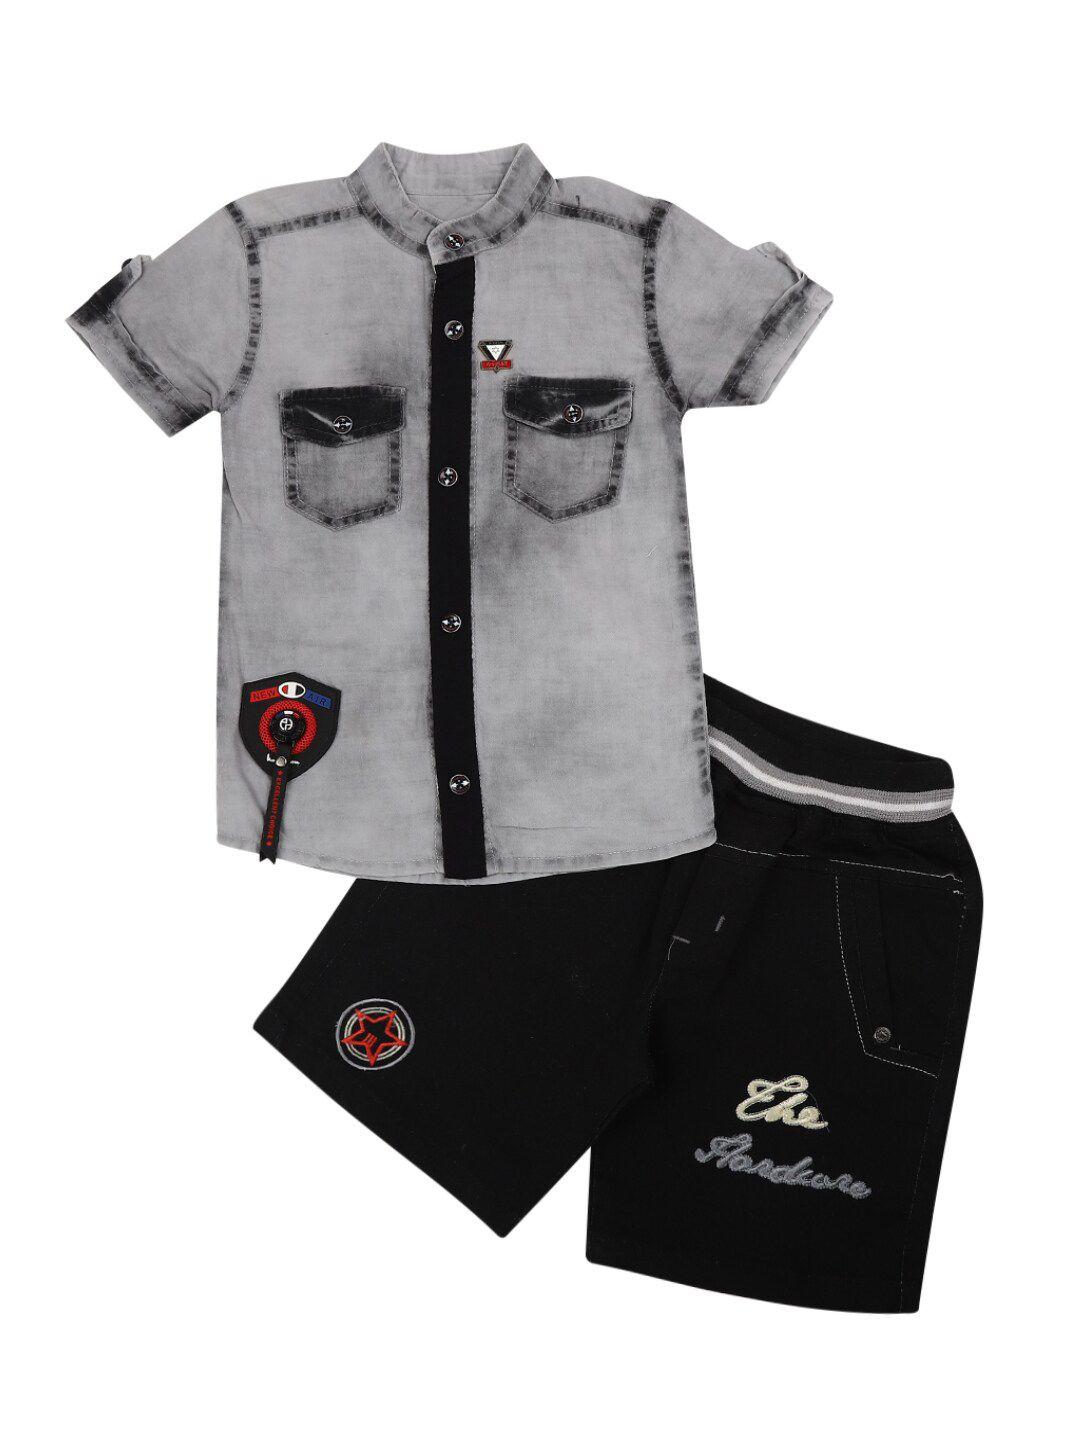 v-mart boys grey printed cotton shirt with shorts